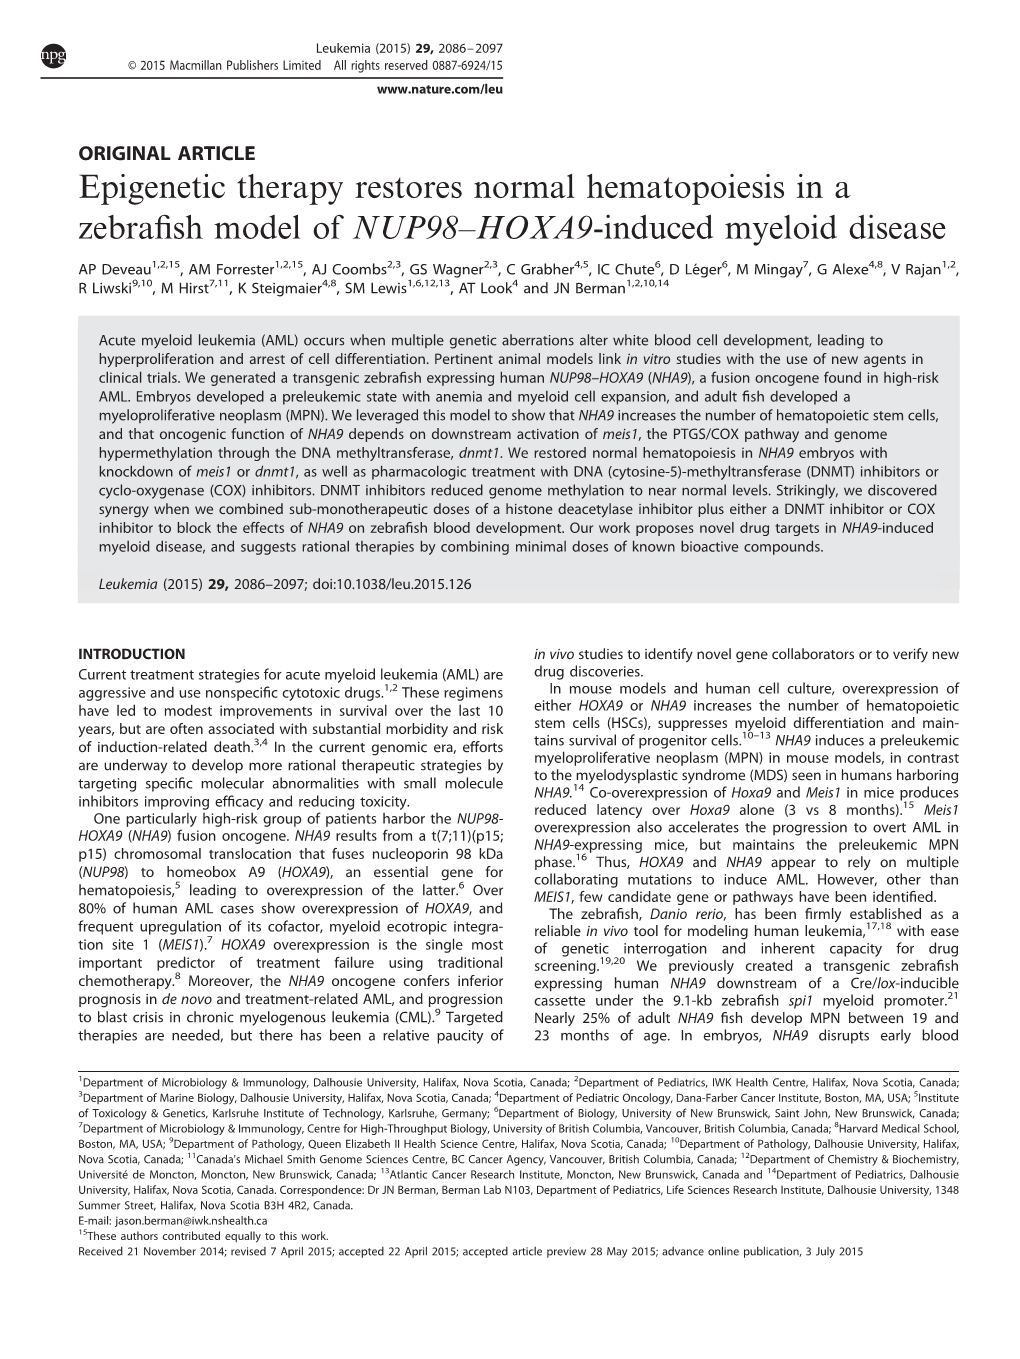 Epigenetic Therapy Restores Normal Hematopoiesis in a Zebrafish Model